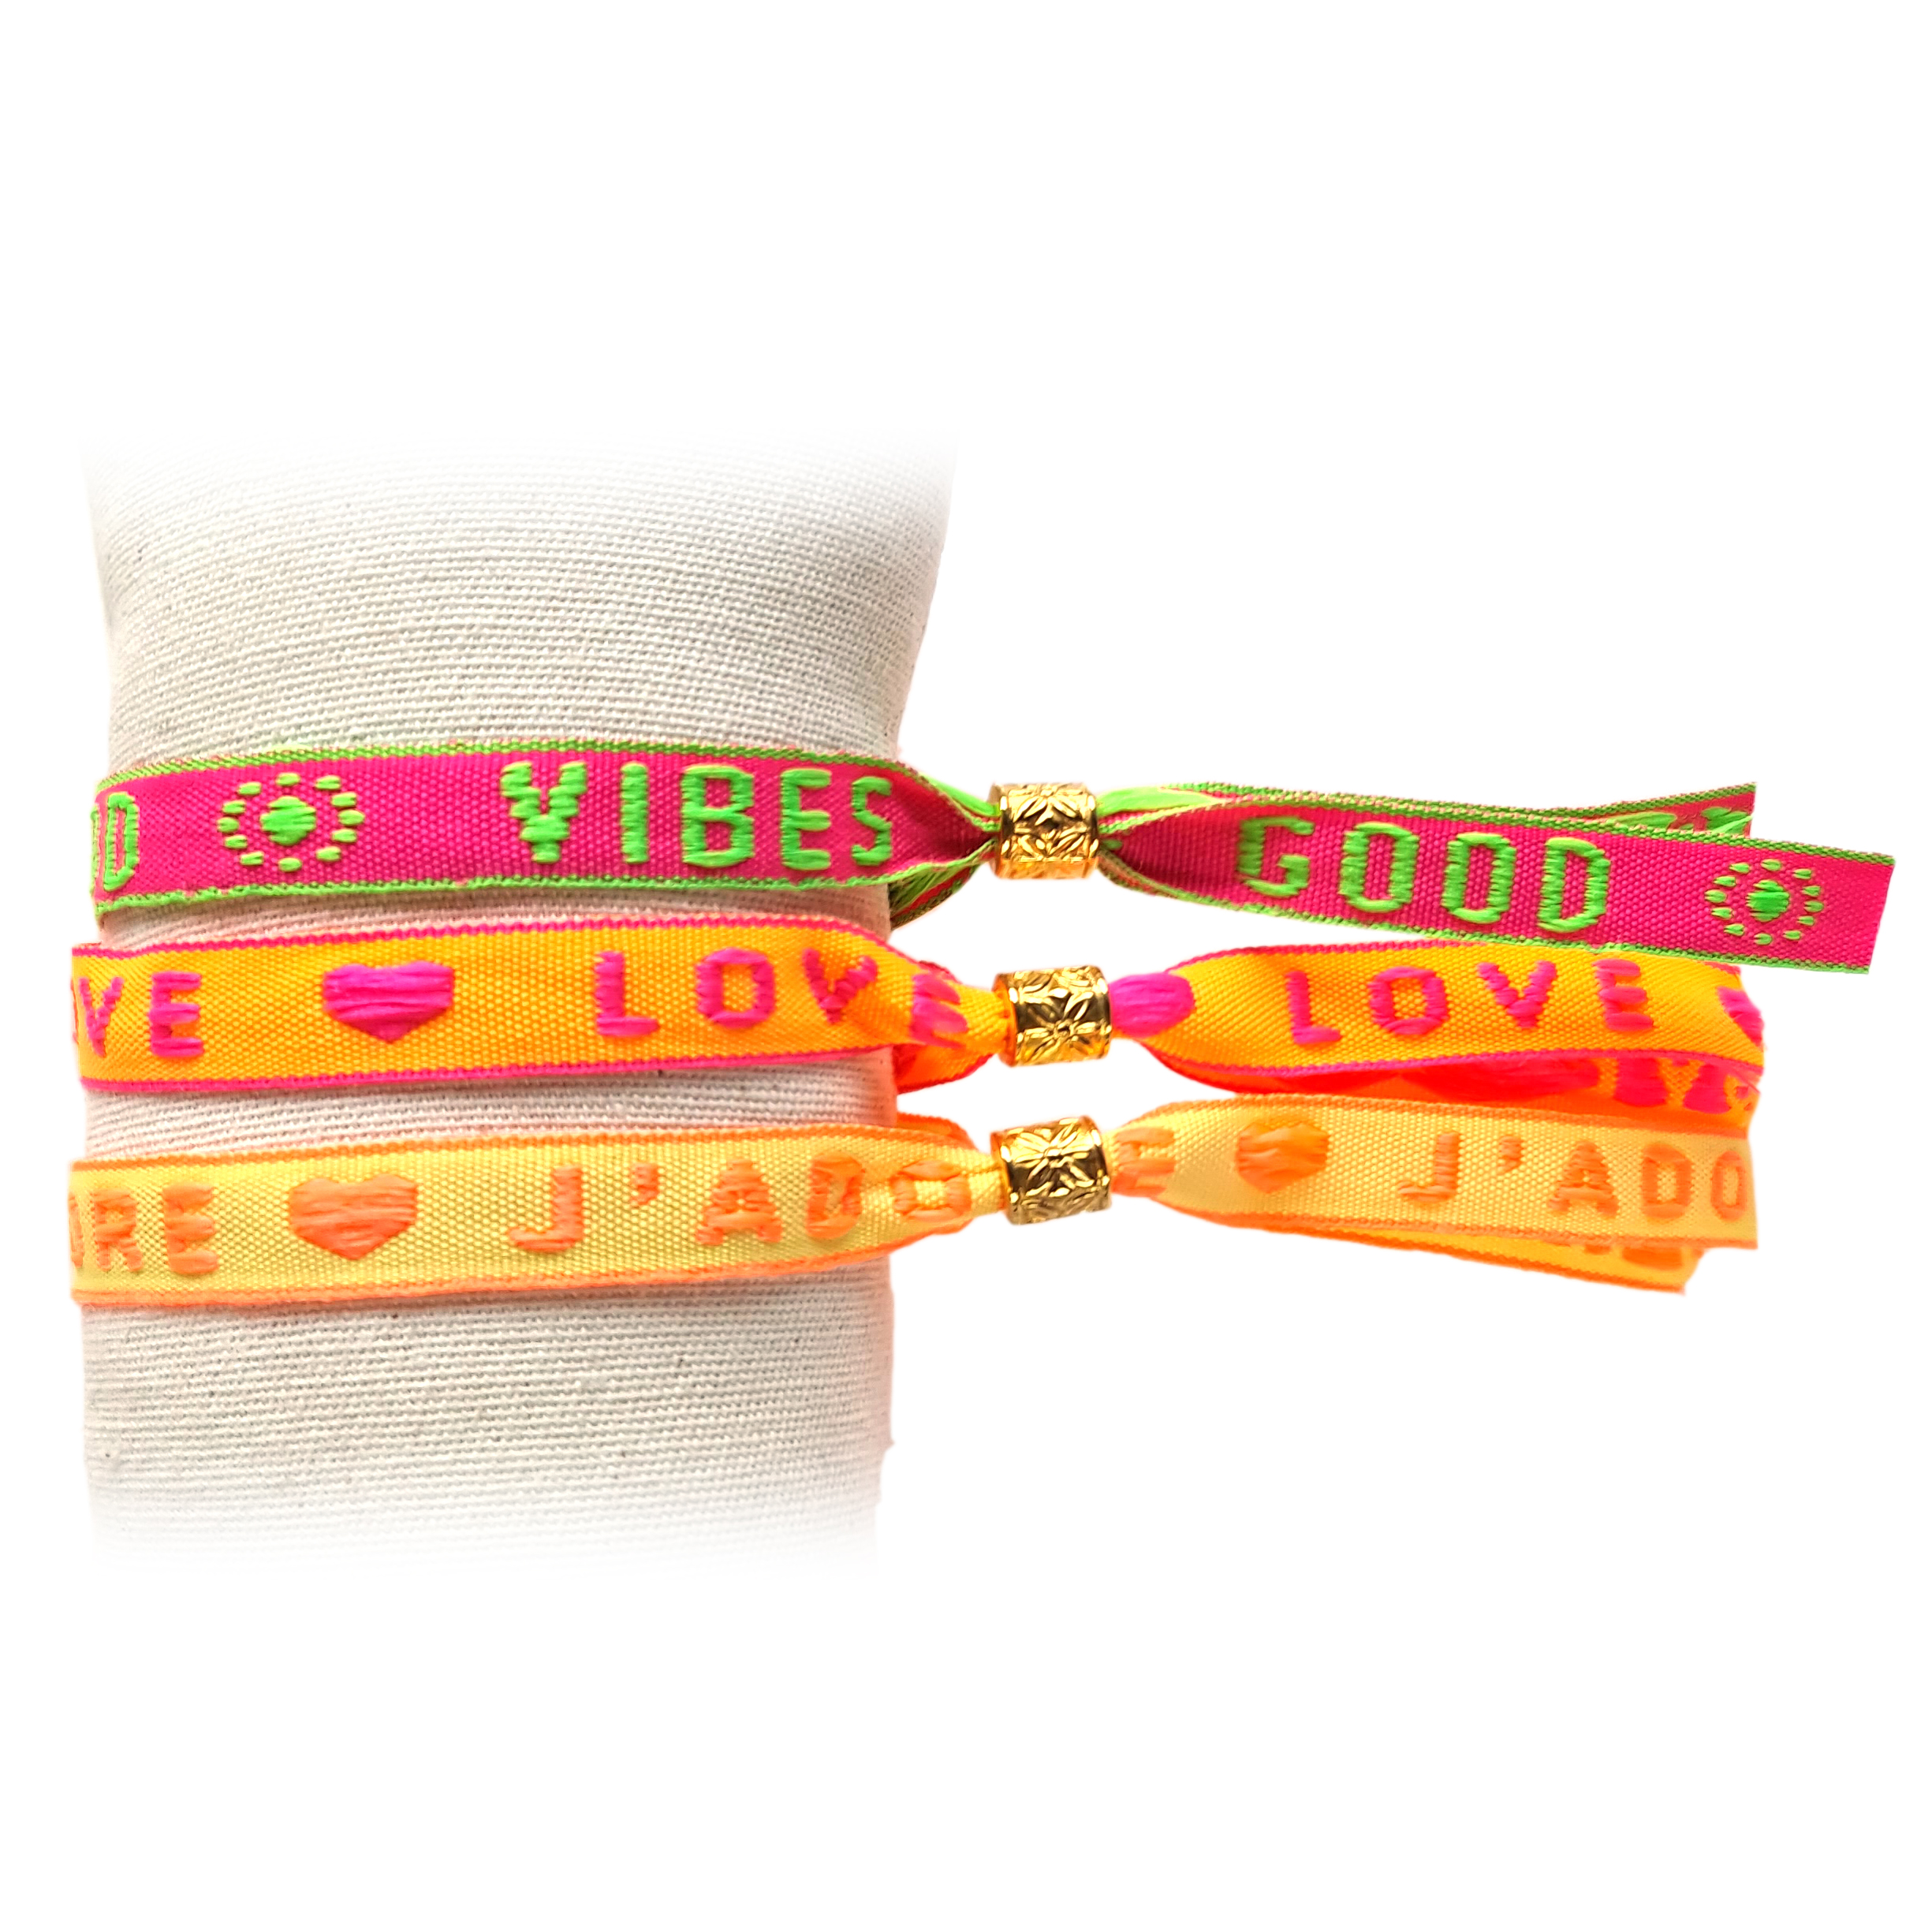 Principessa set van 3 trendy Festival lint armbandjes met tekstlint – Tekst: Good Vibes, Love, J’adore – Kleur: Neon Roze, Oranje, Geel